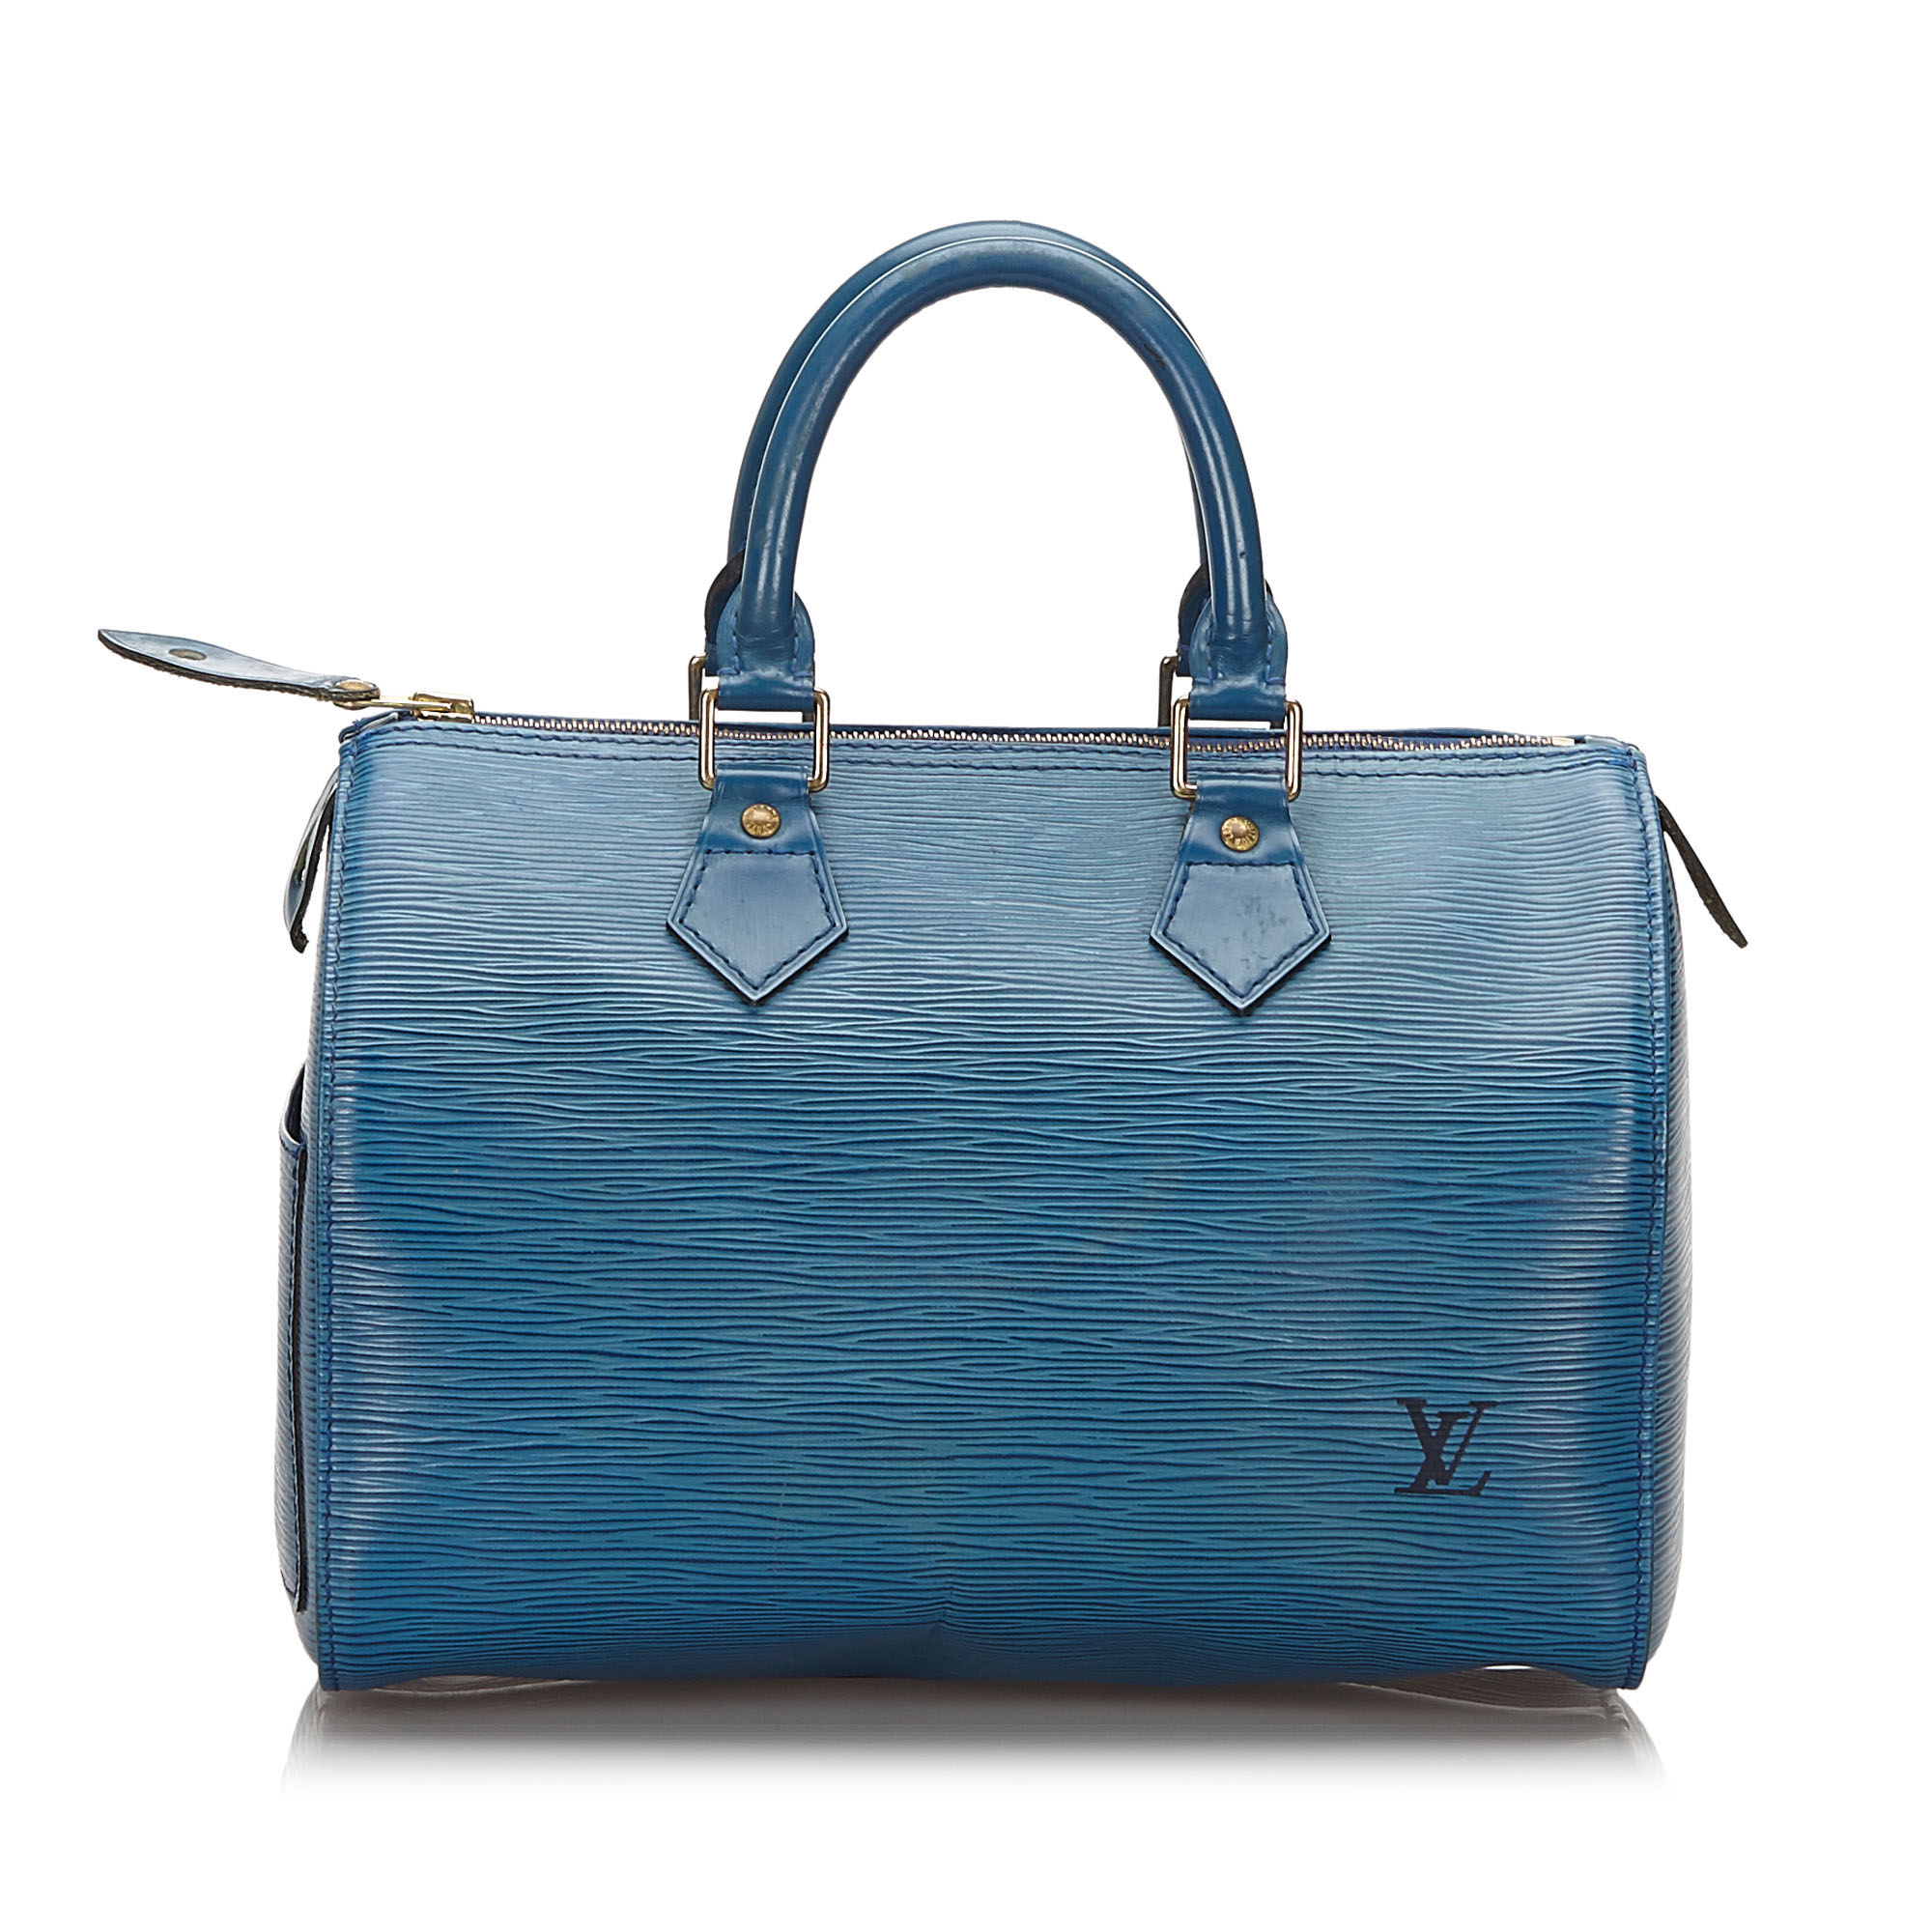 Pre-Loved Louis Vuitton Blue Epi Leather Speedy 25 France | eBay